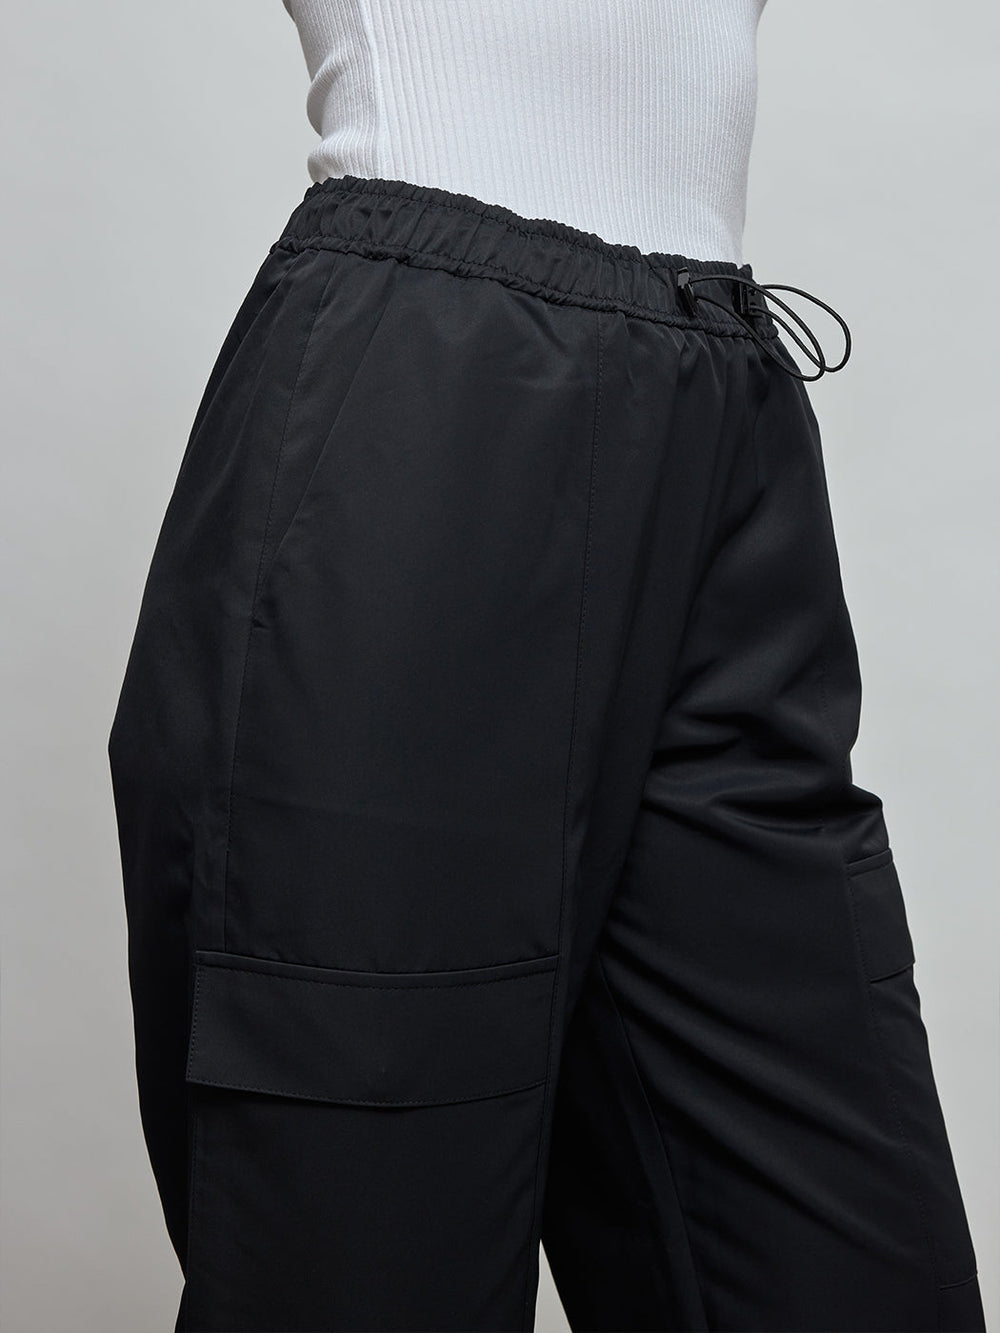 80s Streetstyle Trousers - Black